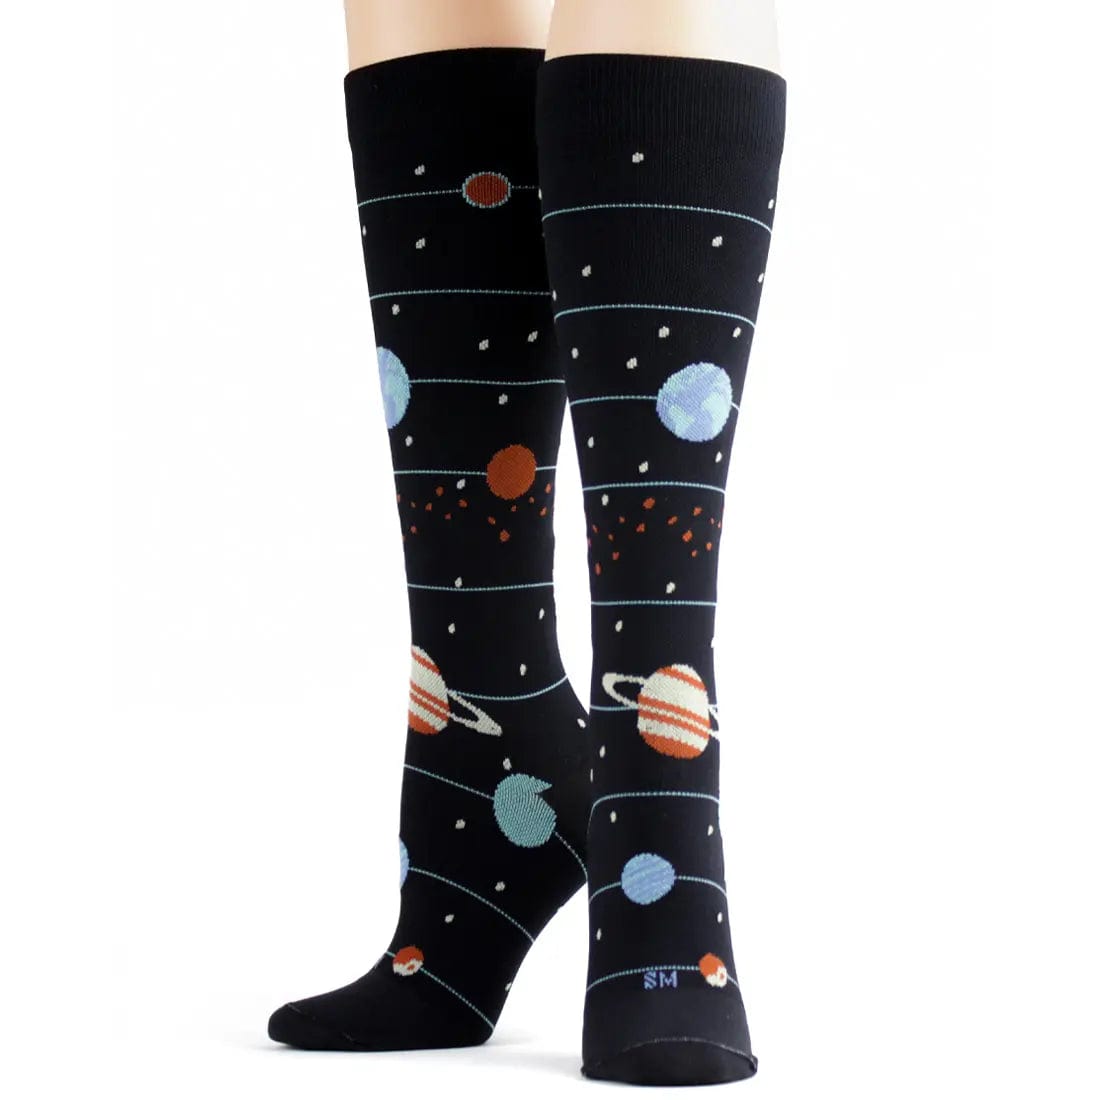 Planets Women's Compression Socks - John's Crazy Socks